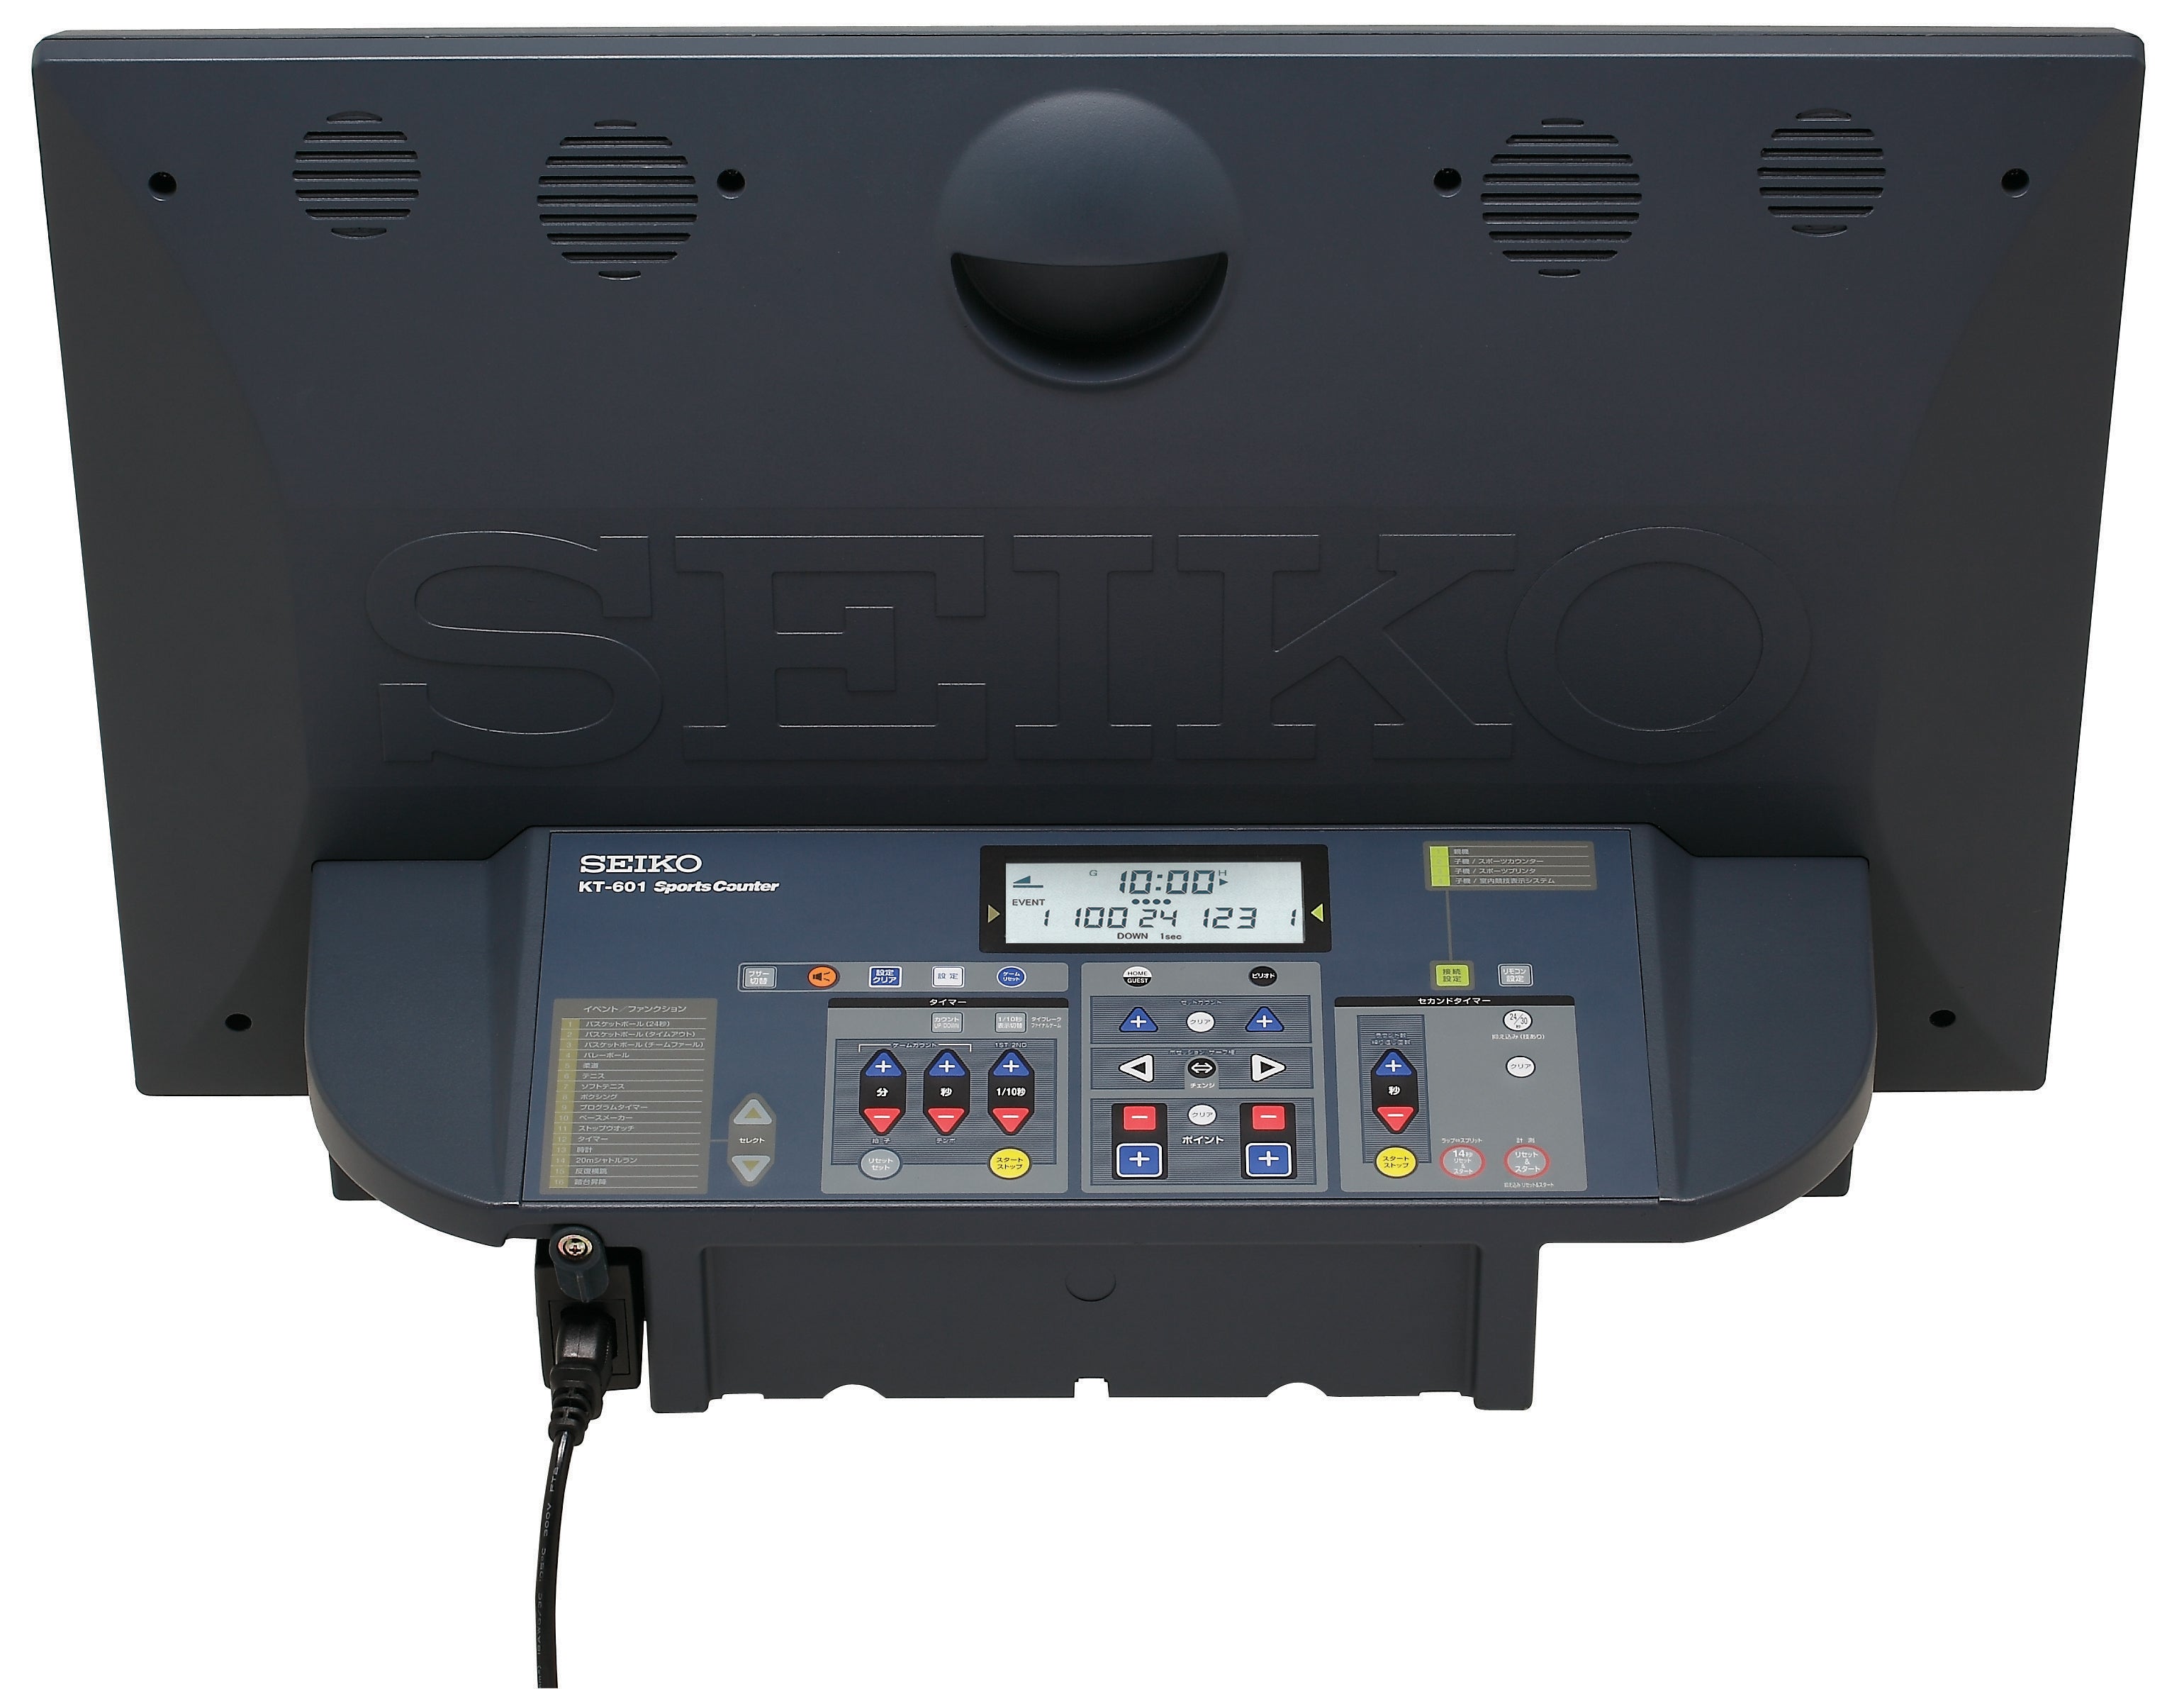 SEIKO KT-601 - Table-Top Multi-Function Scoreboard